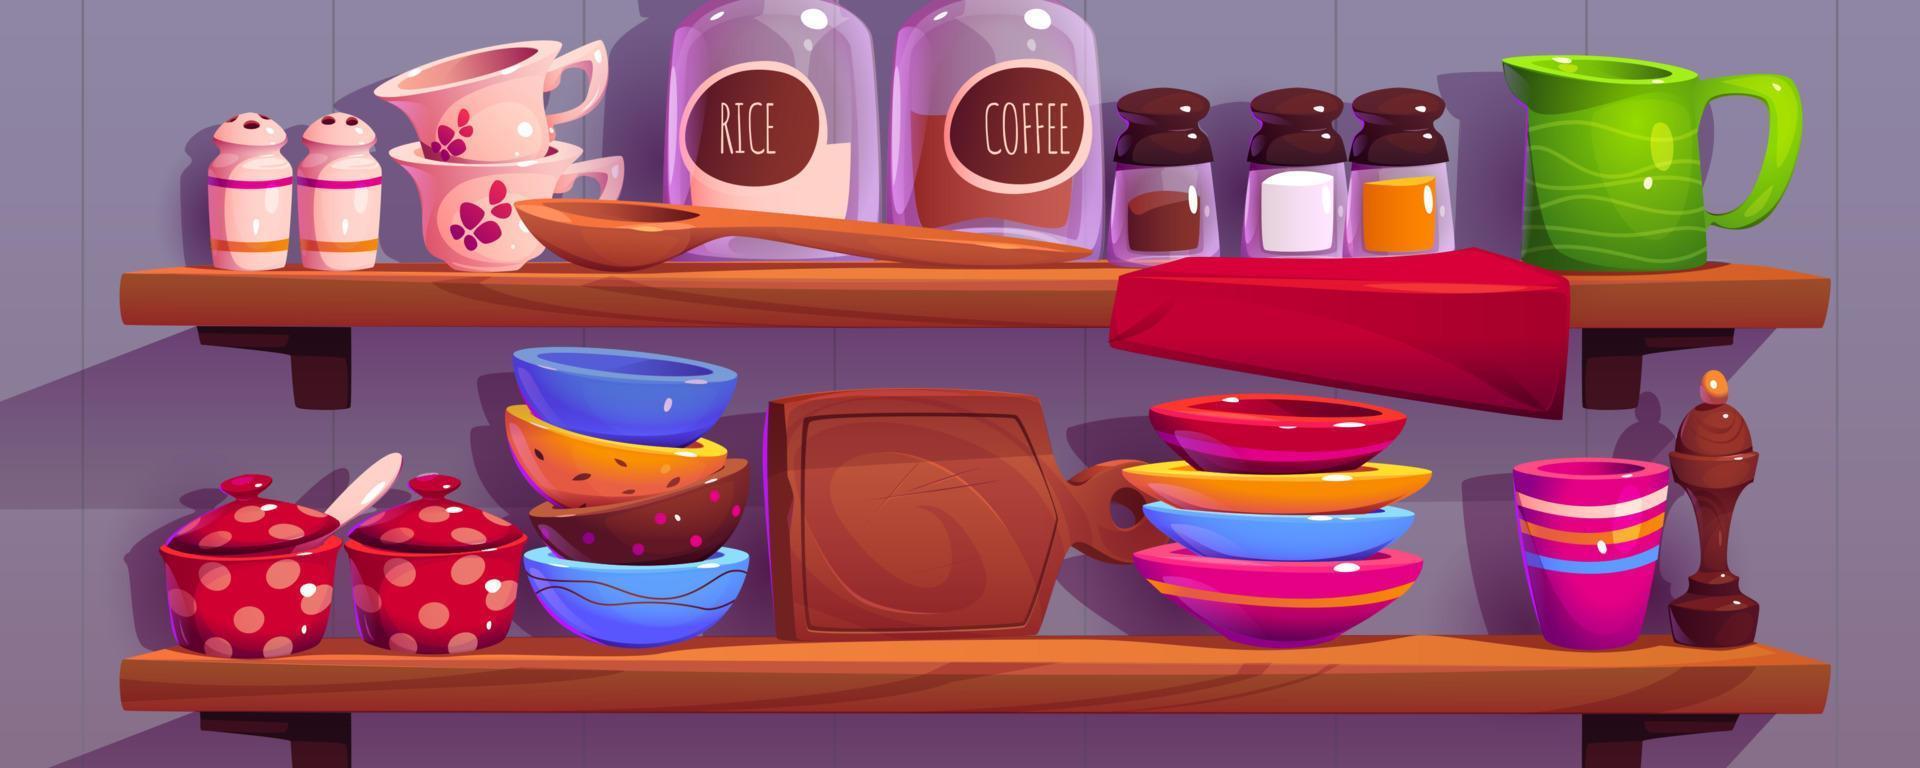 Kitchen shelves with kitchenware illustration vector